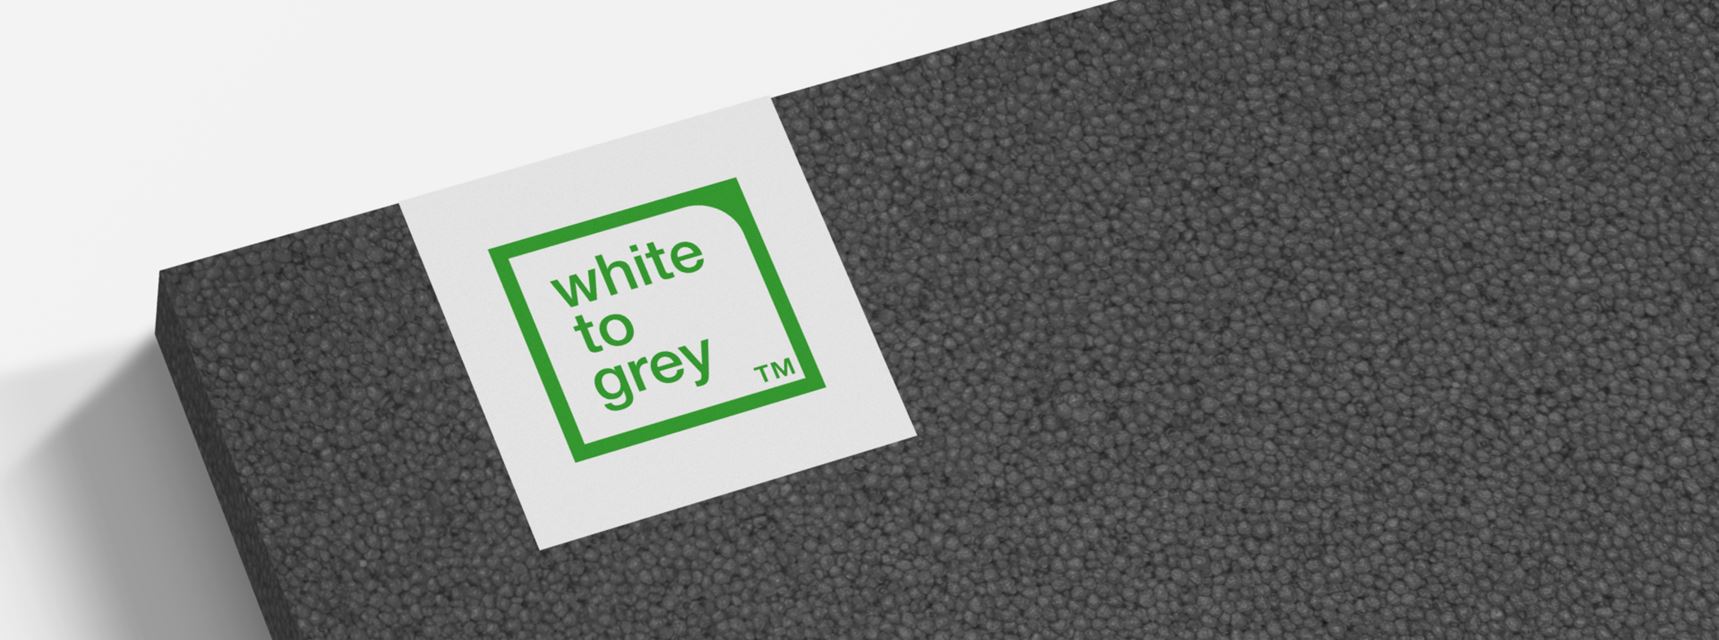 Sundolitt White to Grey™